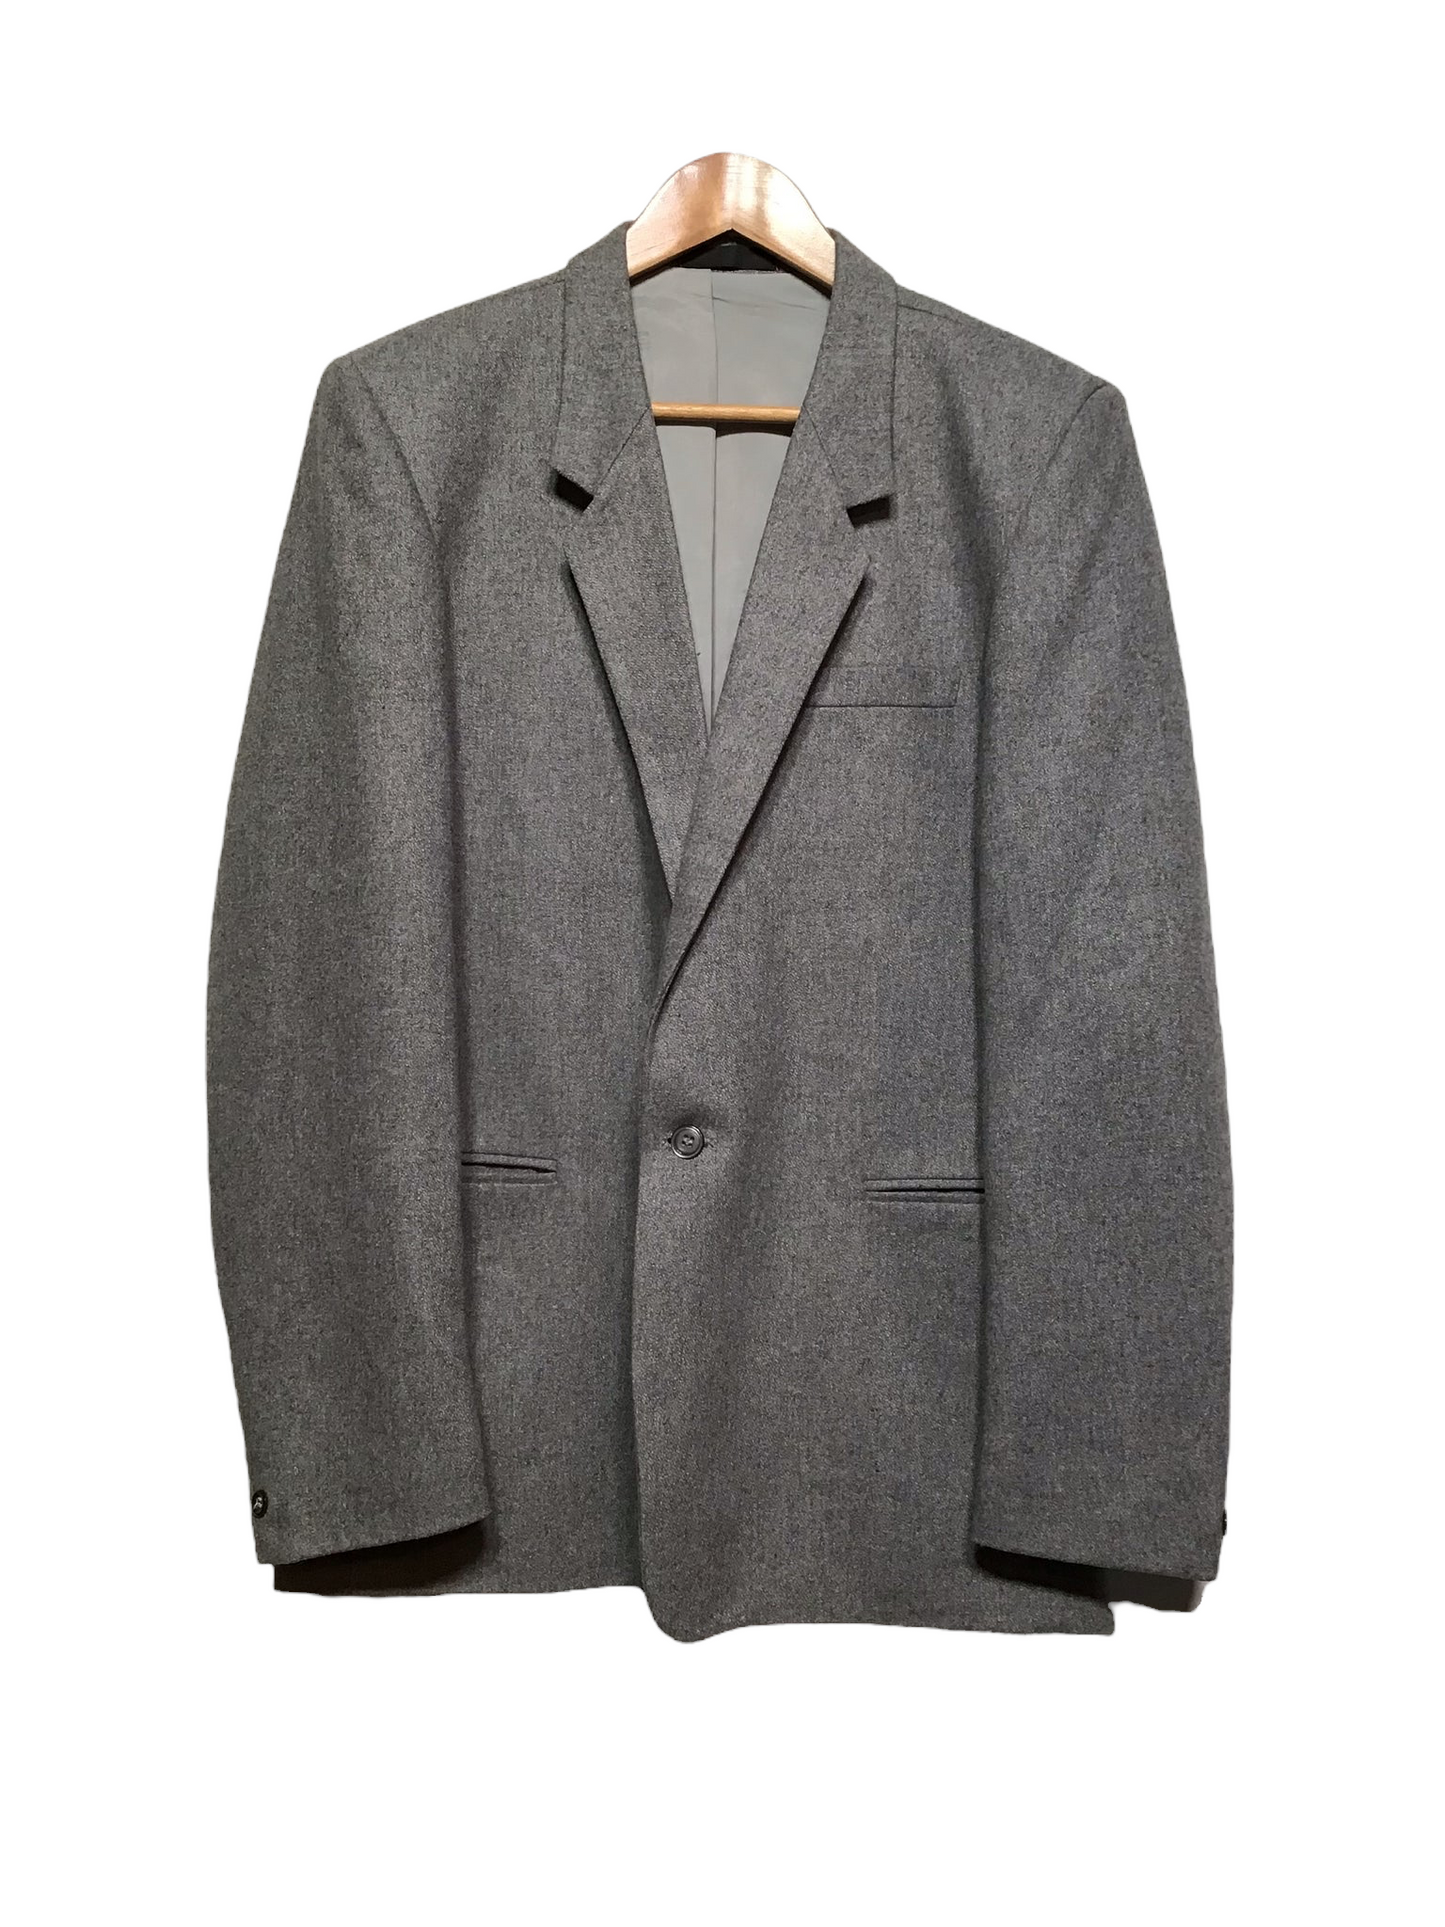 Men’s Grey Blazer (Size L)